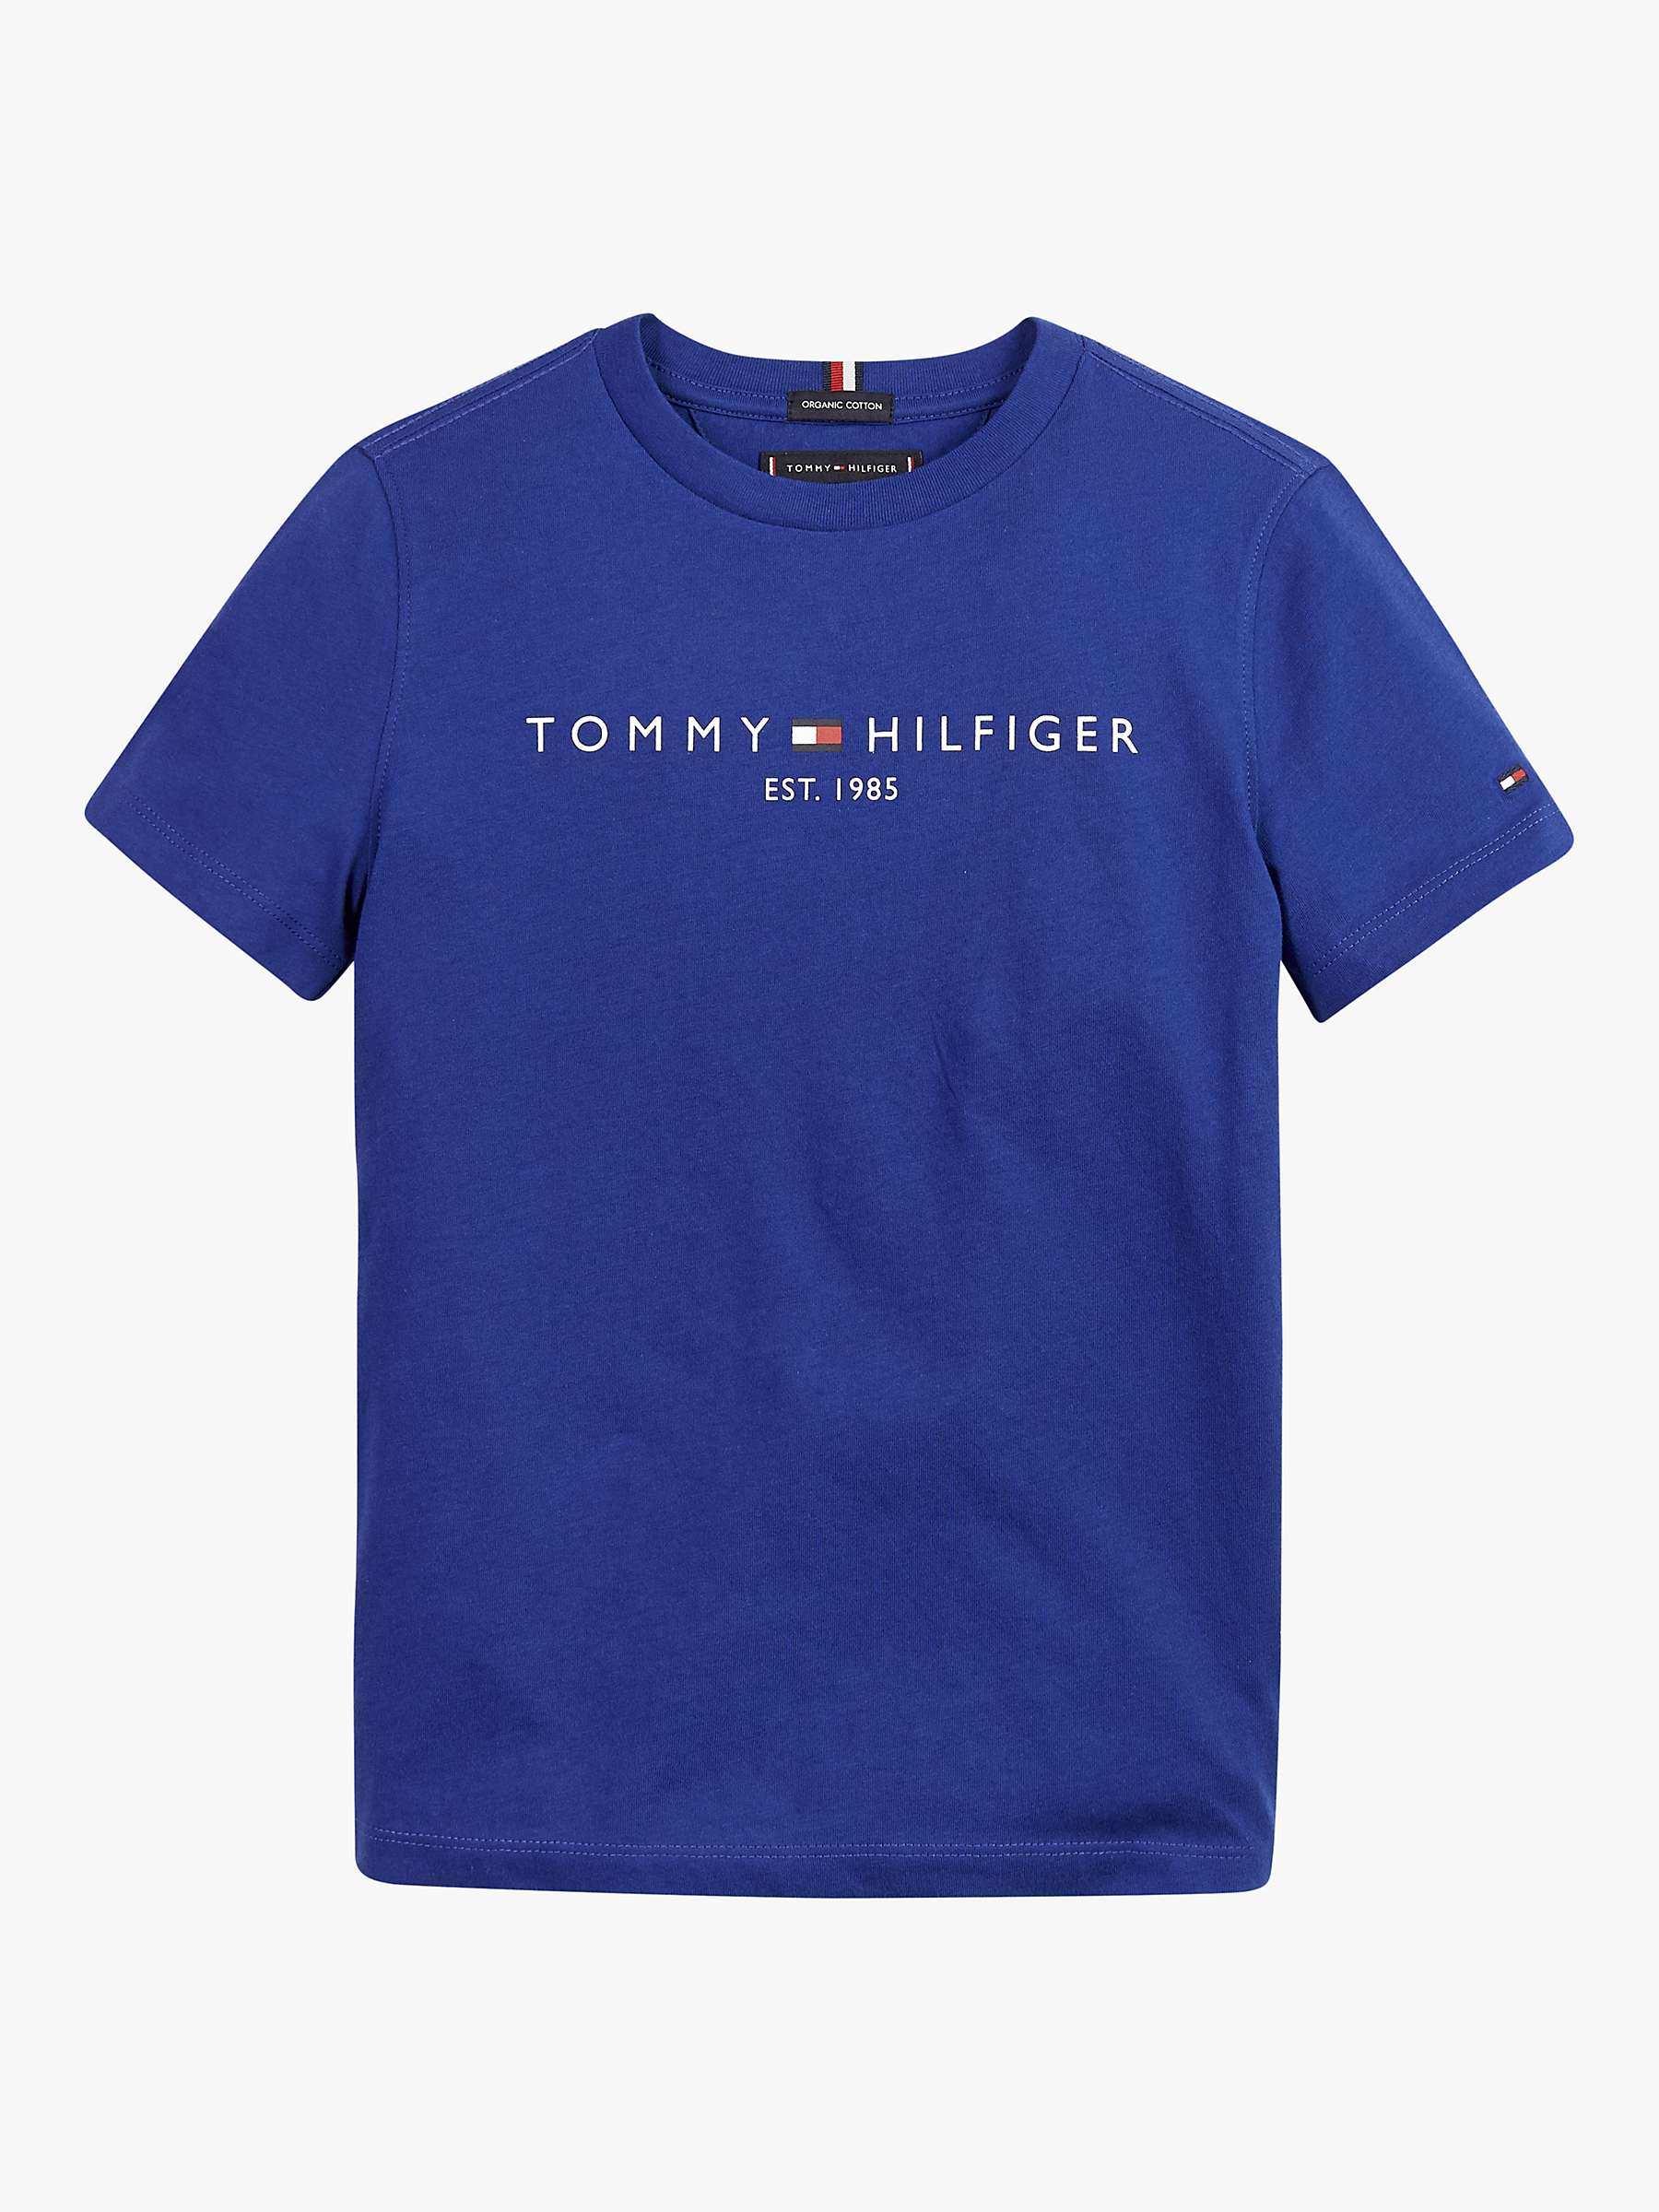 Buy Tommy Hilfiger Children's Essential T-Shirt Online at johnlewis.com